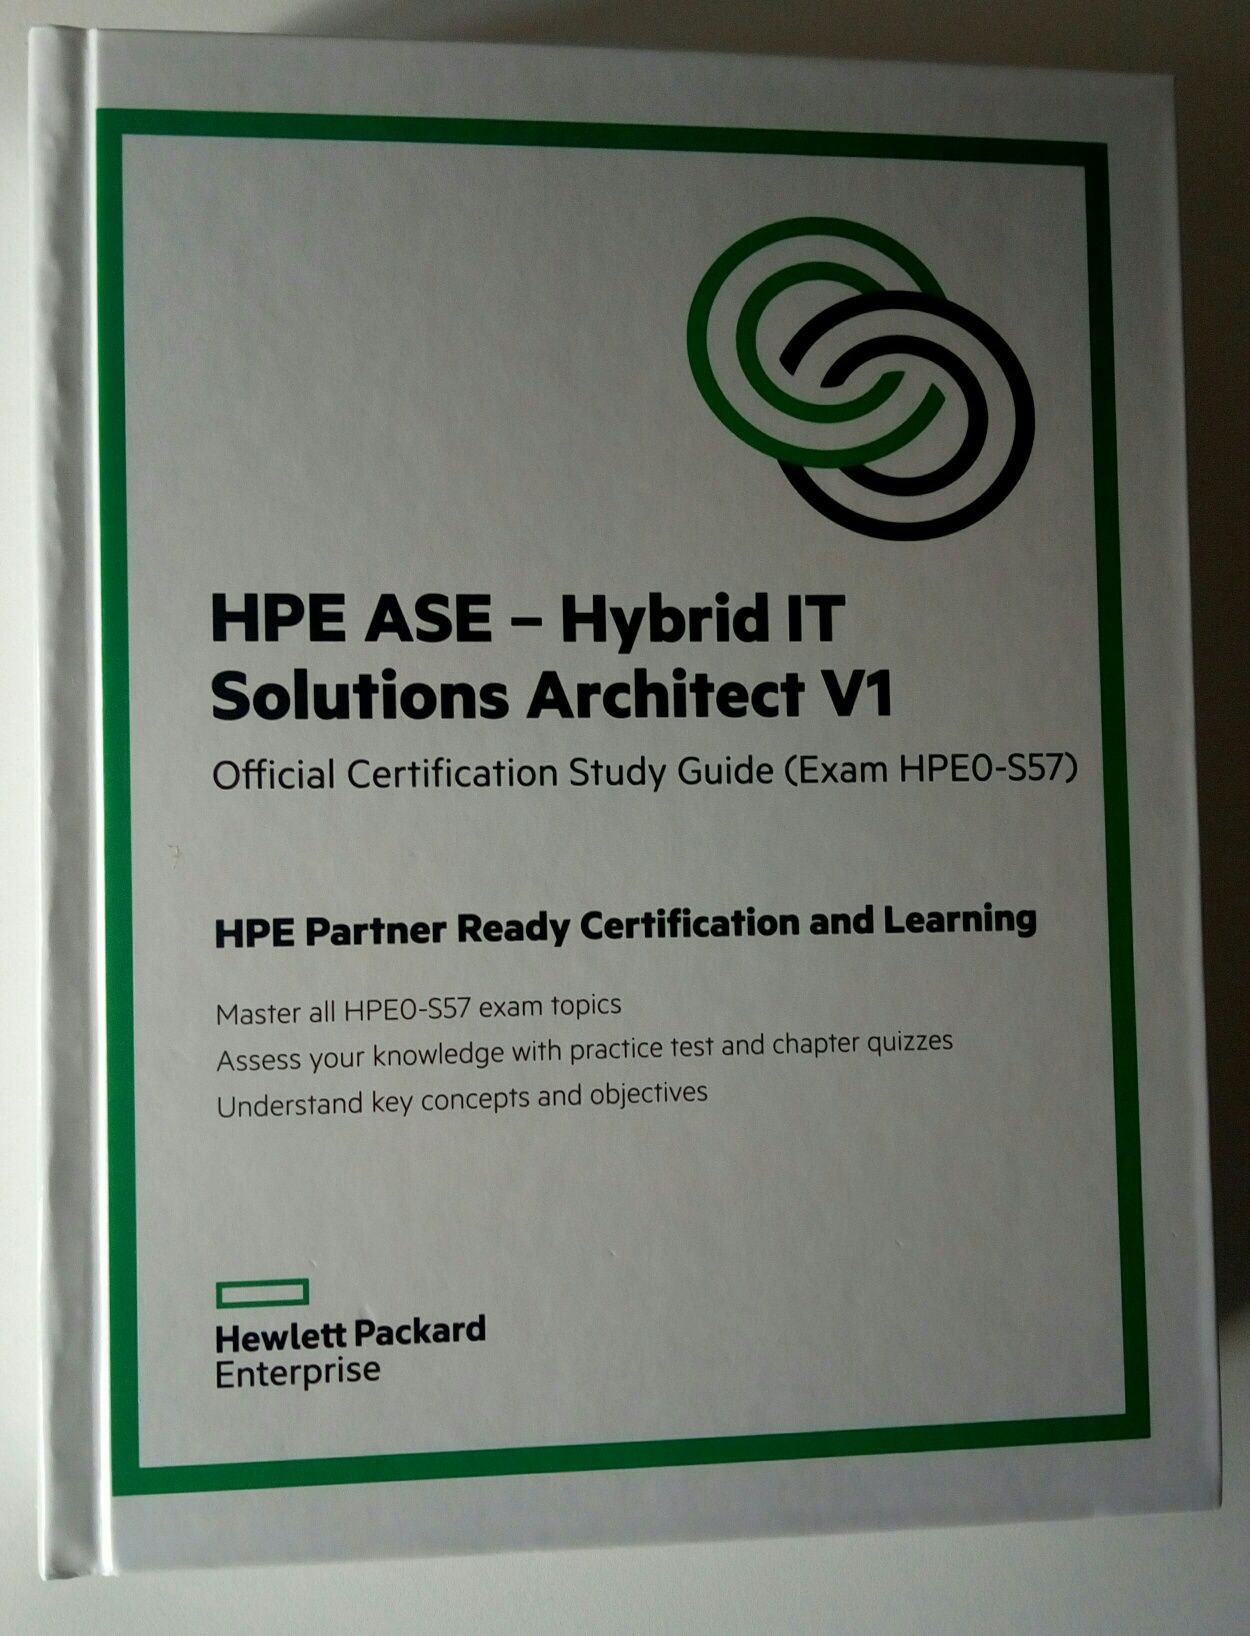 Книга HPE ASE Hybrid IT Architect V1. Выгода в цене 35$!